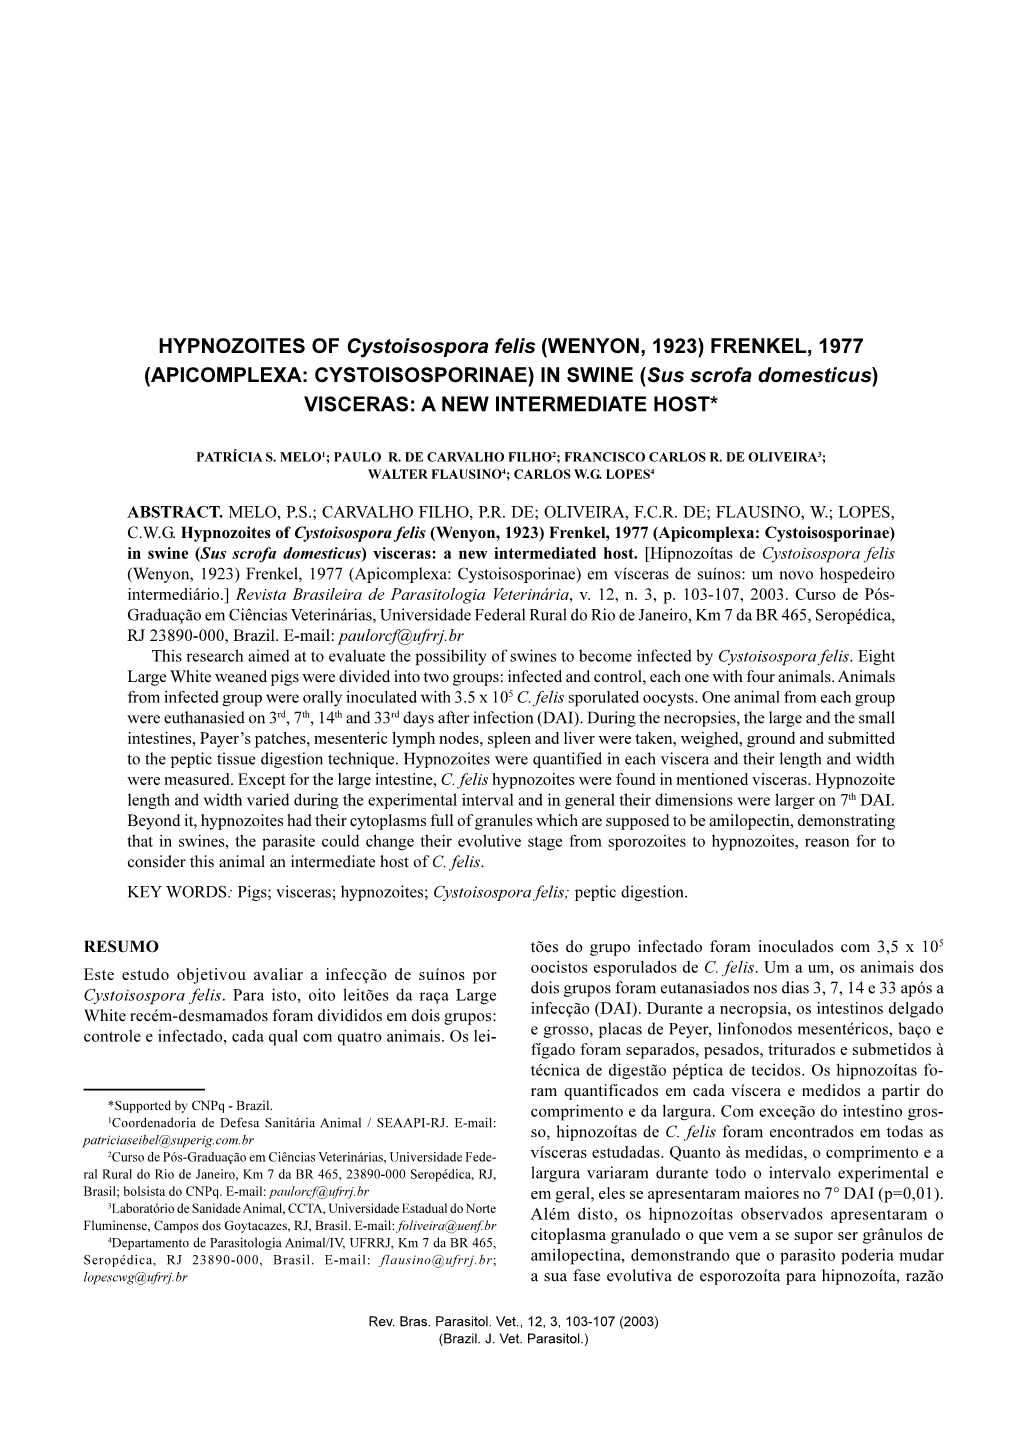 HYPNOZOITES of Cystoisospora Felis (WENYON, 1923) FRENKEL, 1977 (APICOMPLEXA: CYSTOISOSPORINAE) in SWINE (Sus Scrofa Domesticus) VISCERAS: a NEW INTERMEDIATE HOST*